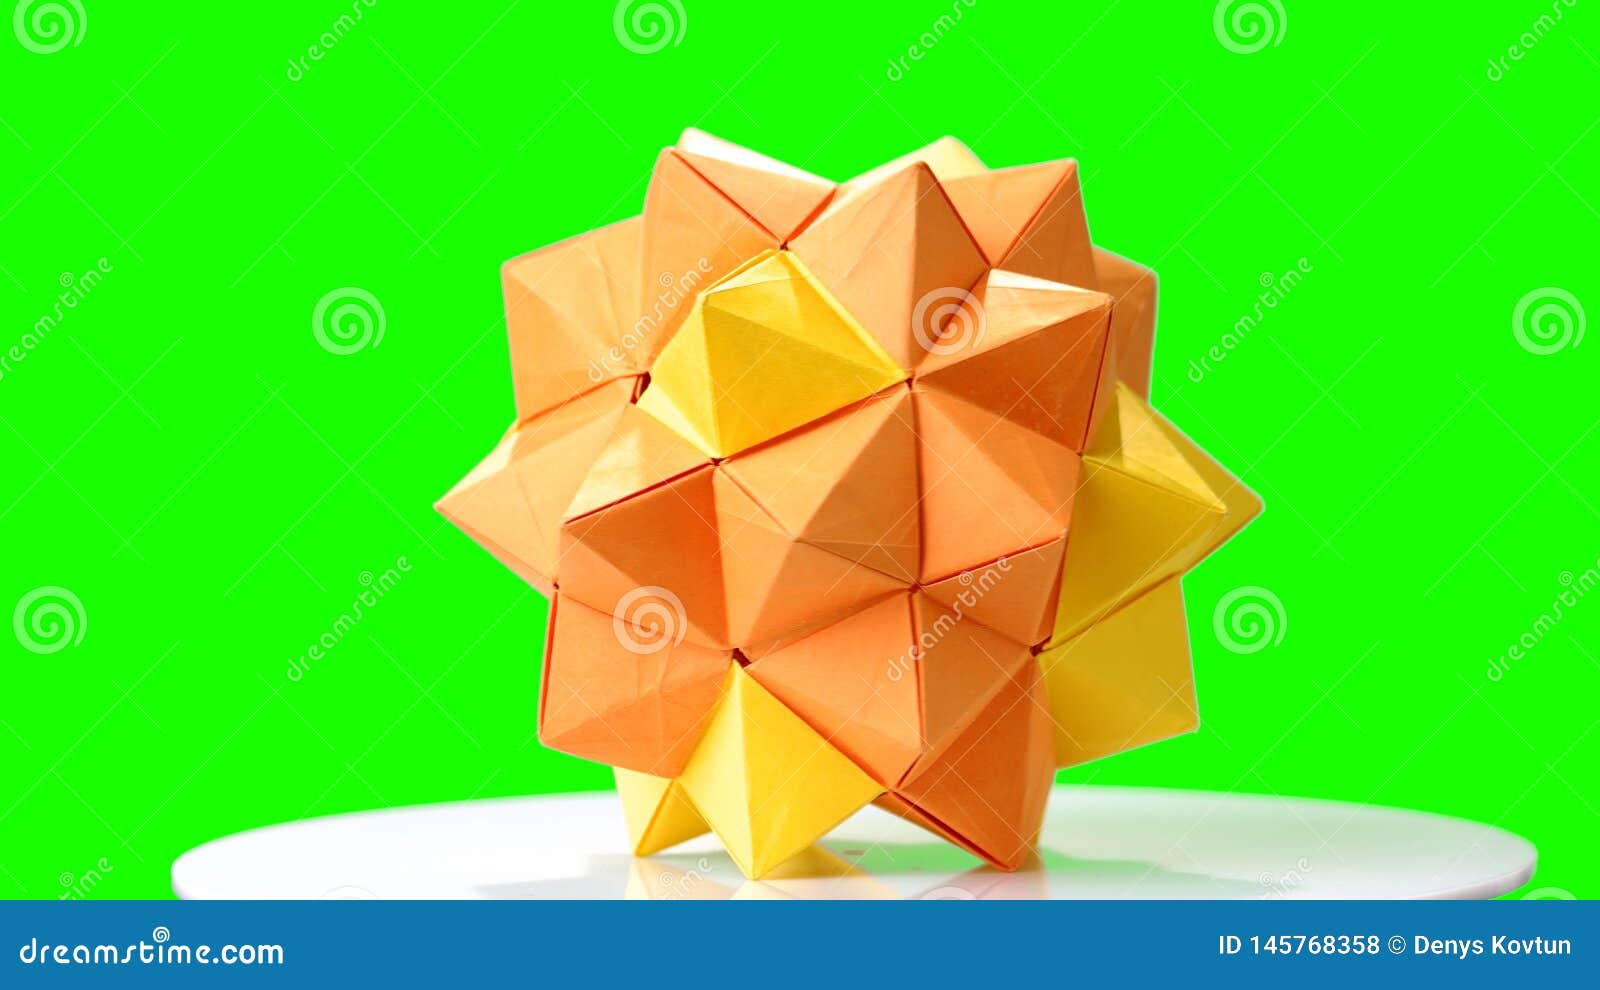 Modular Origami Flower On Green Screen Stock Photo Image